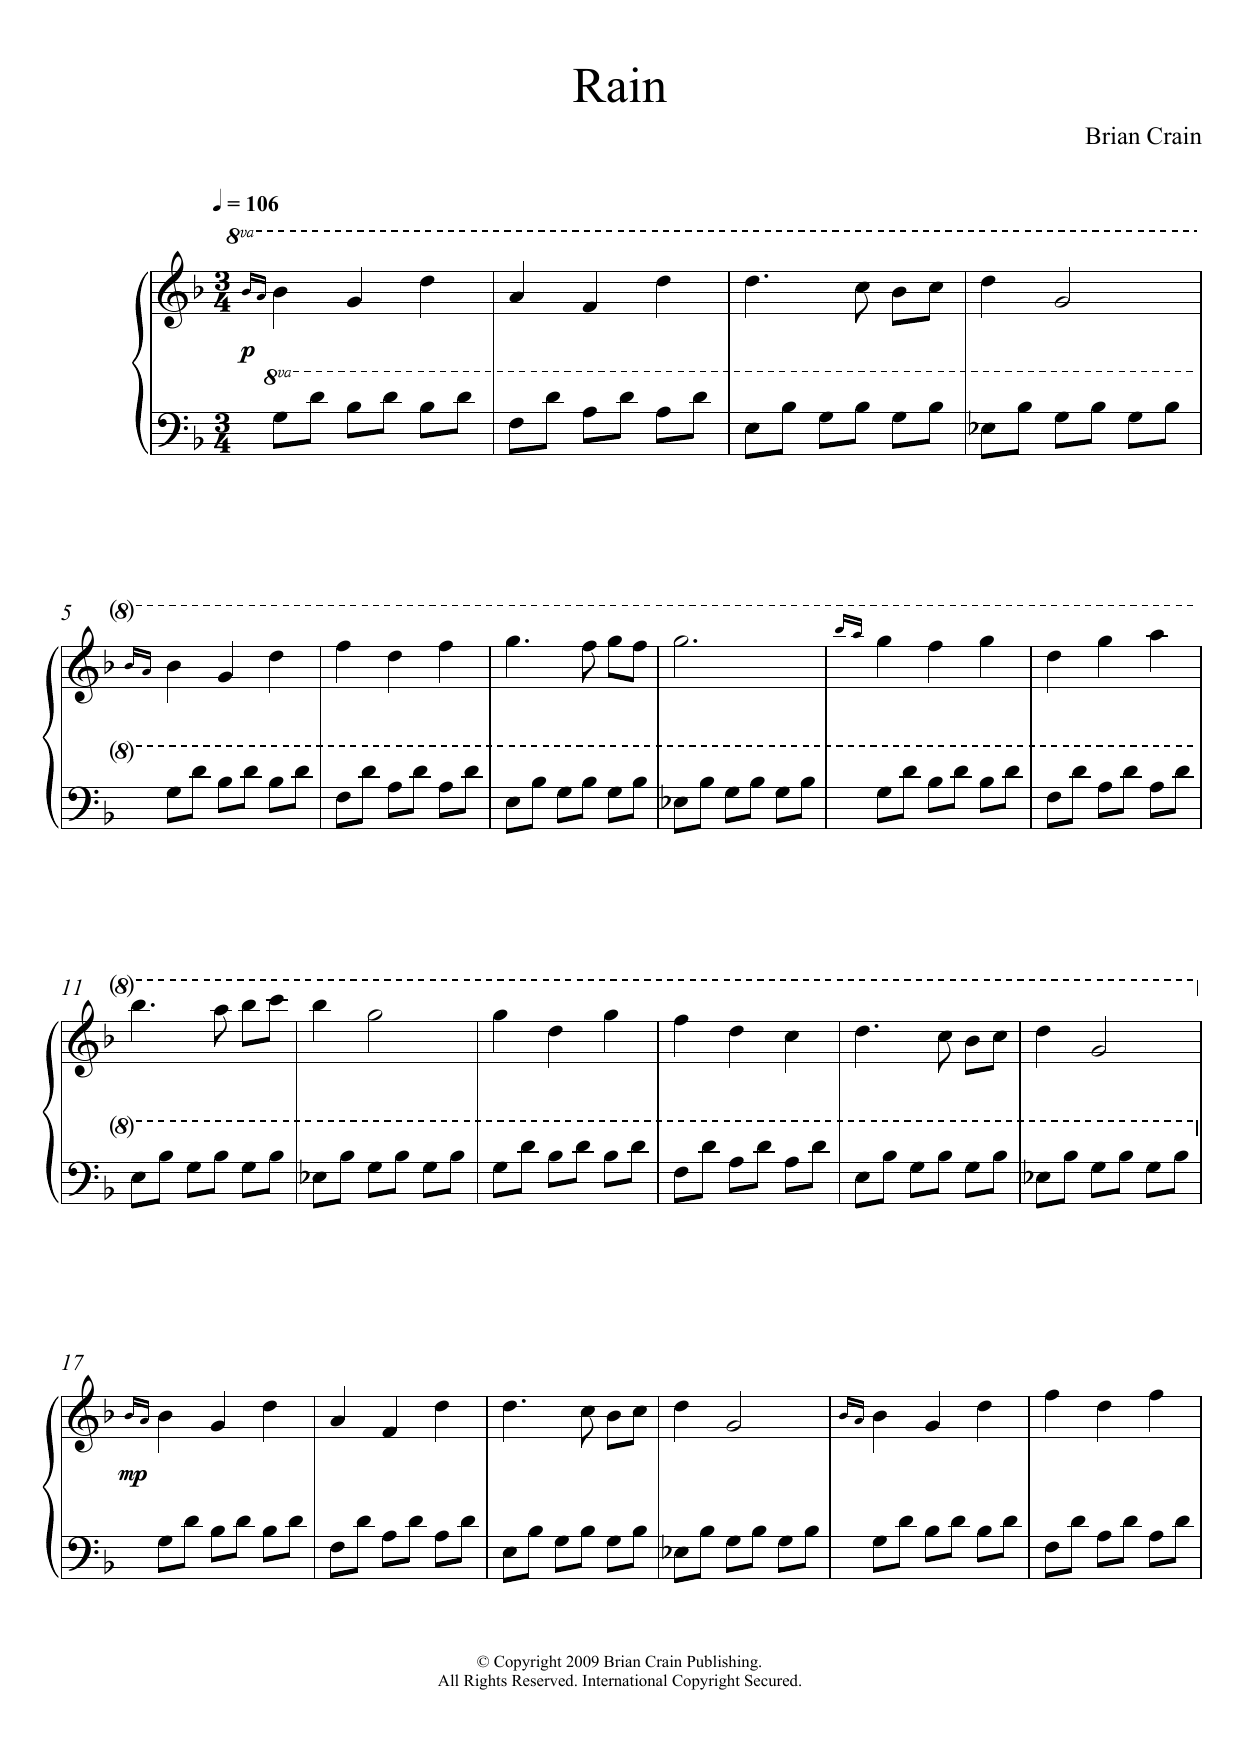 Brian Crain Rain Sheet Music Notes & Chords for Piano - Download or Print PDF